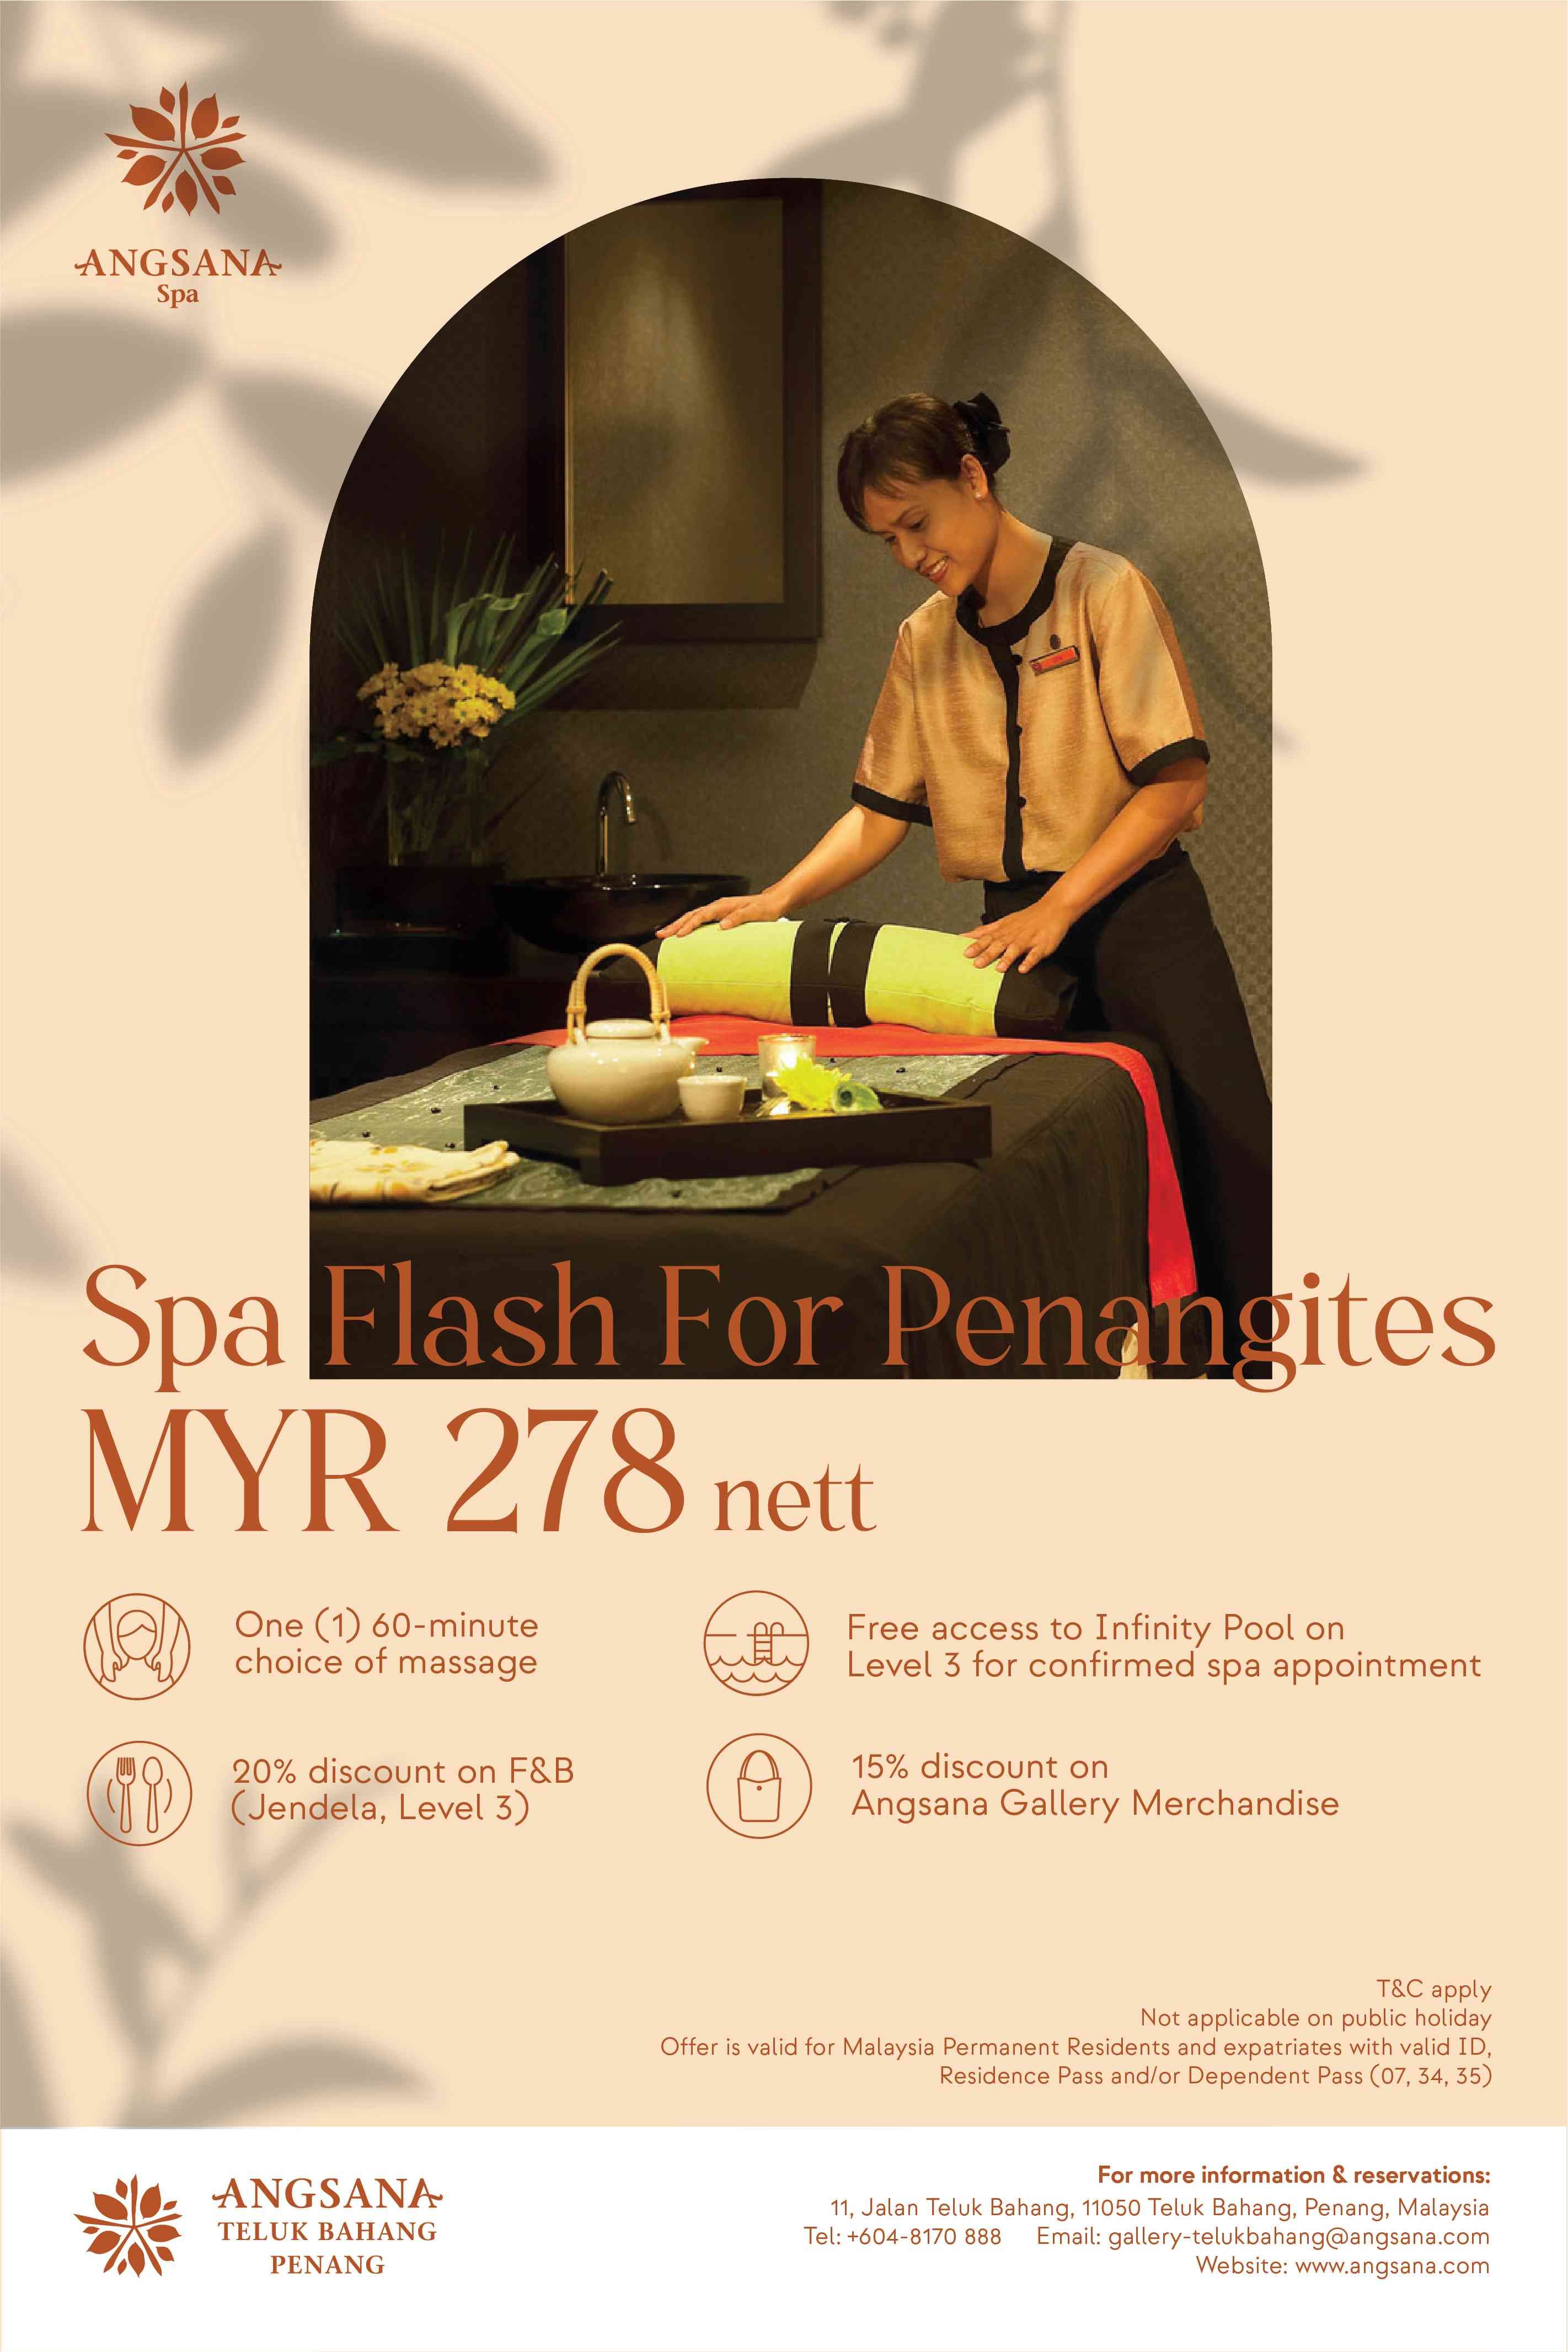 Spa Flash for Penangites by Angsana Teluk Bahang